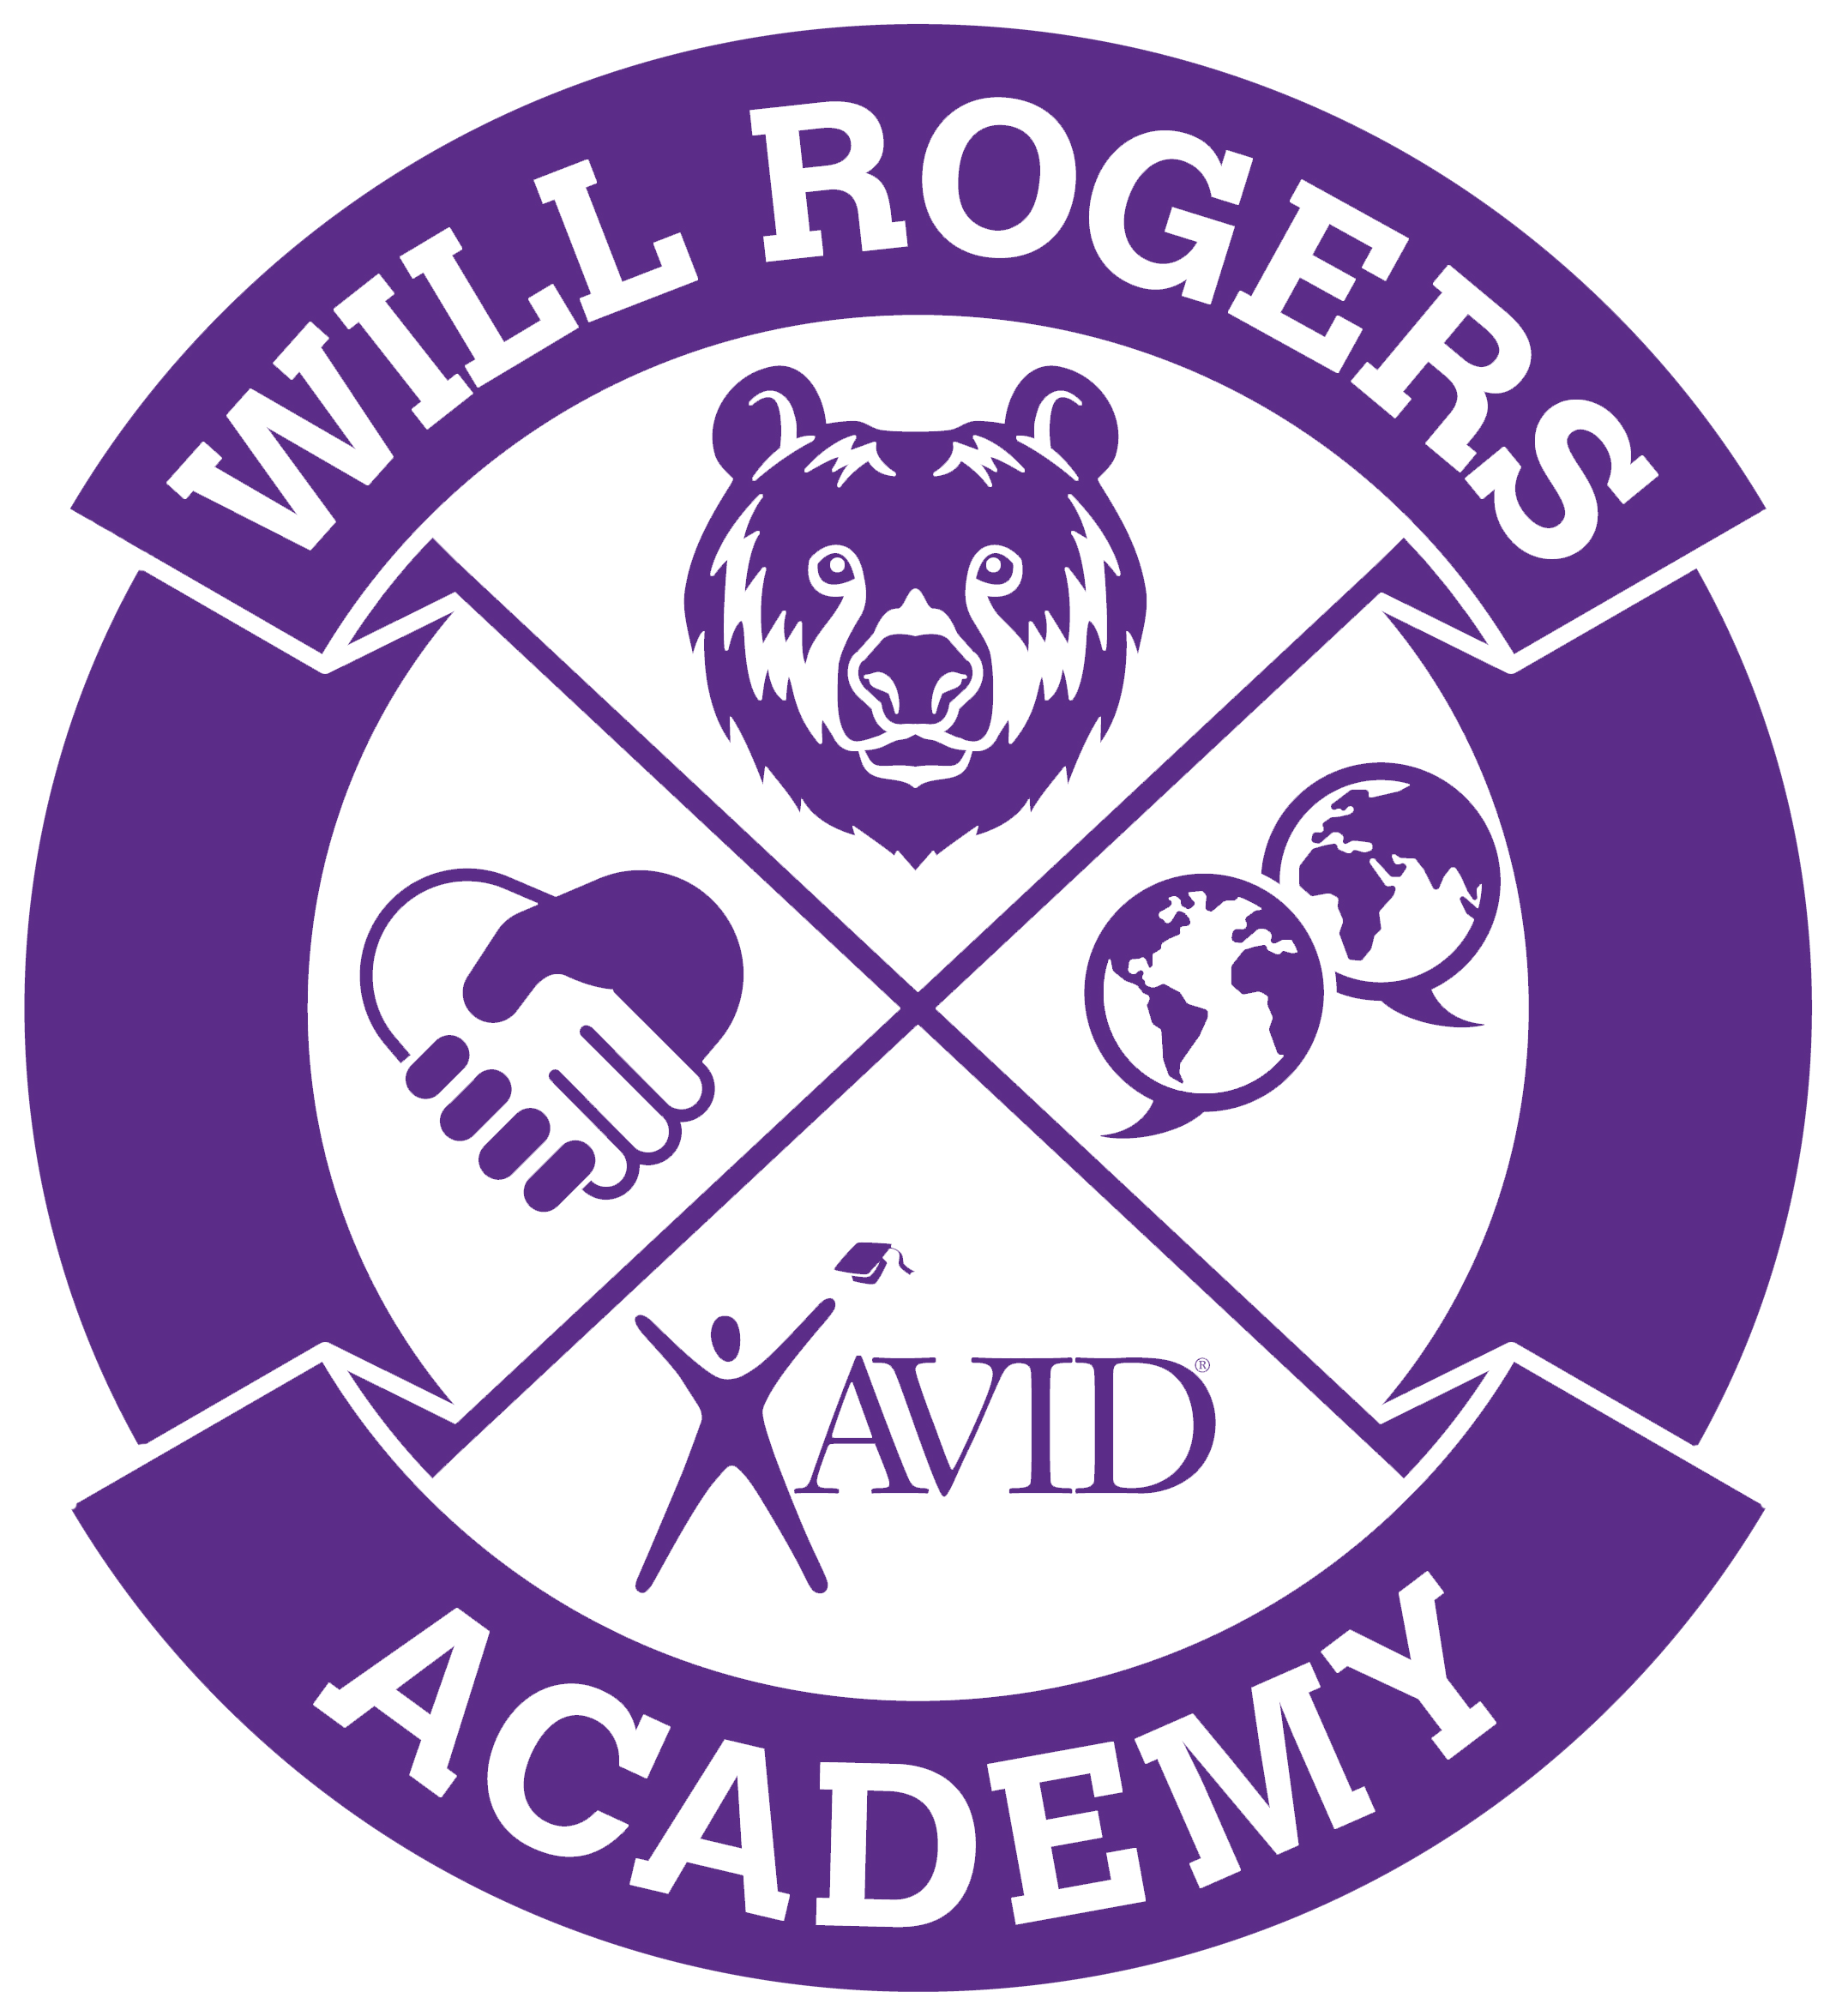 Rogers Academy logo